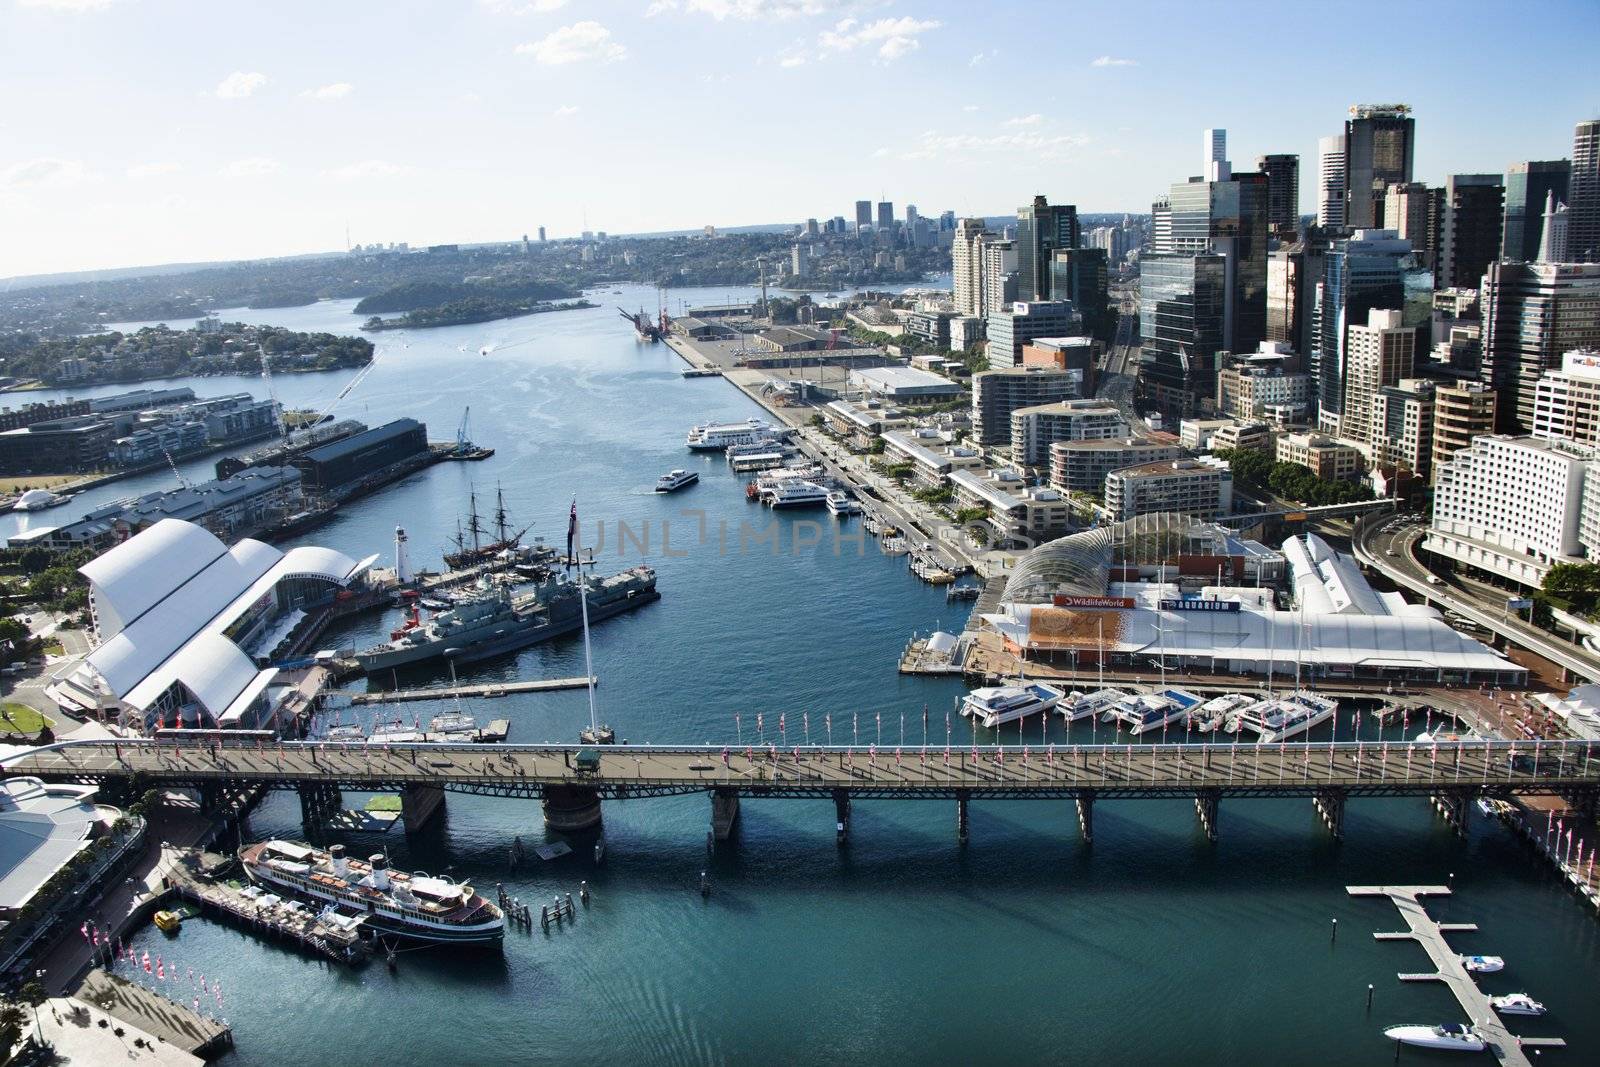 Aerial view of Darling Harbour in Sydney, Australia.